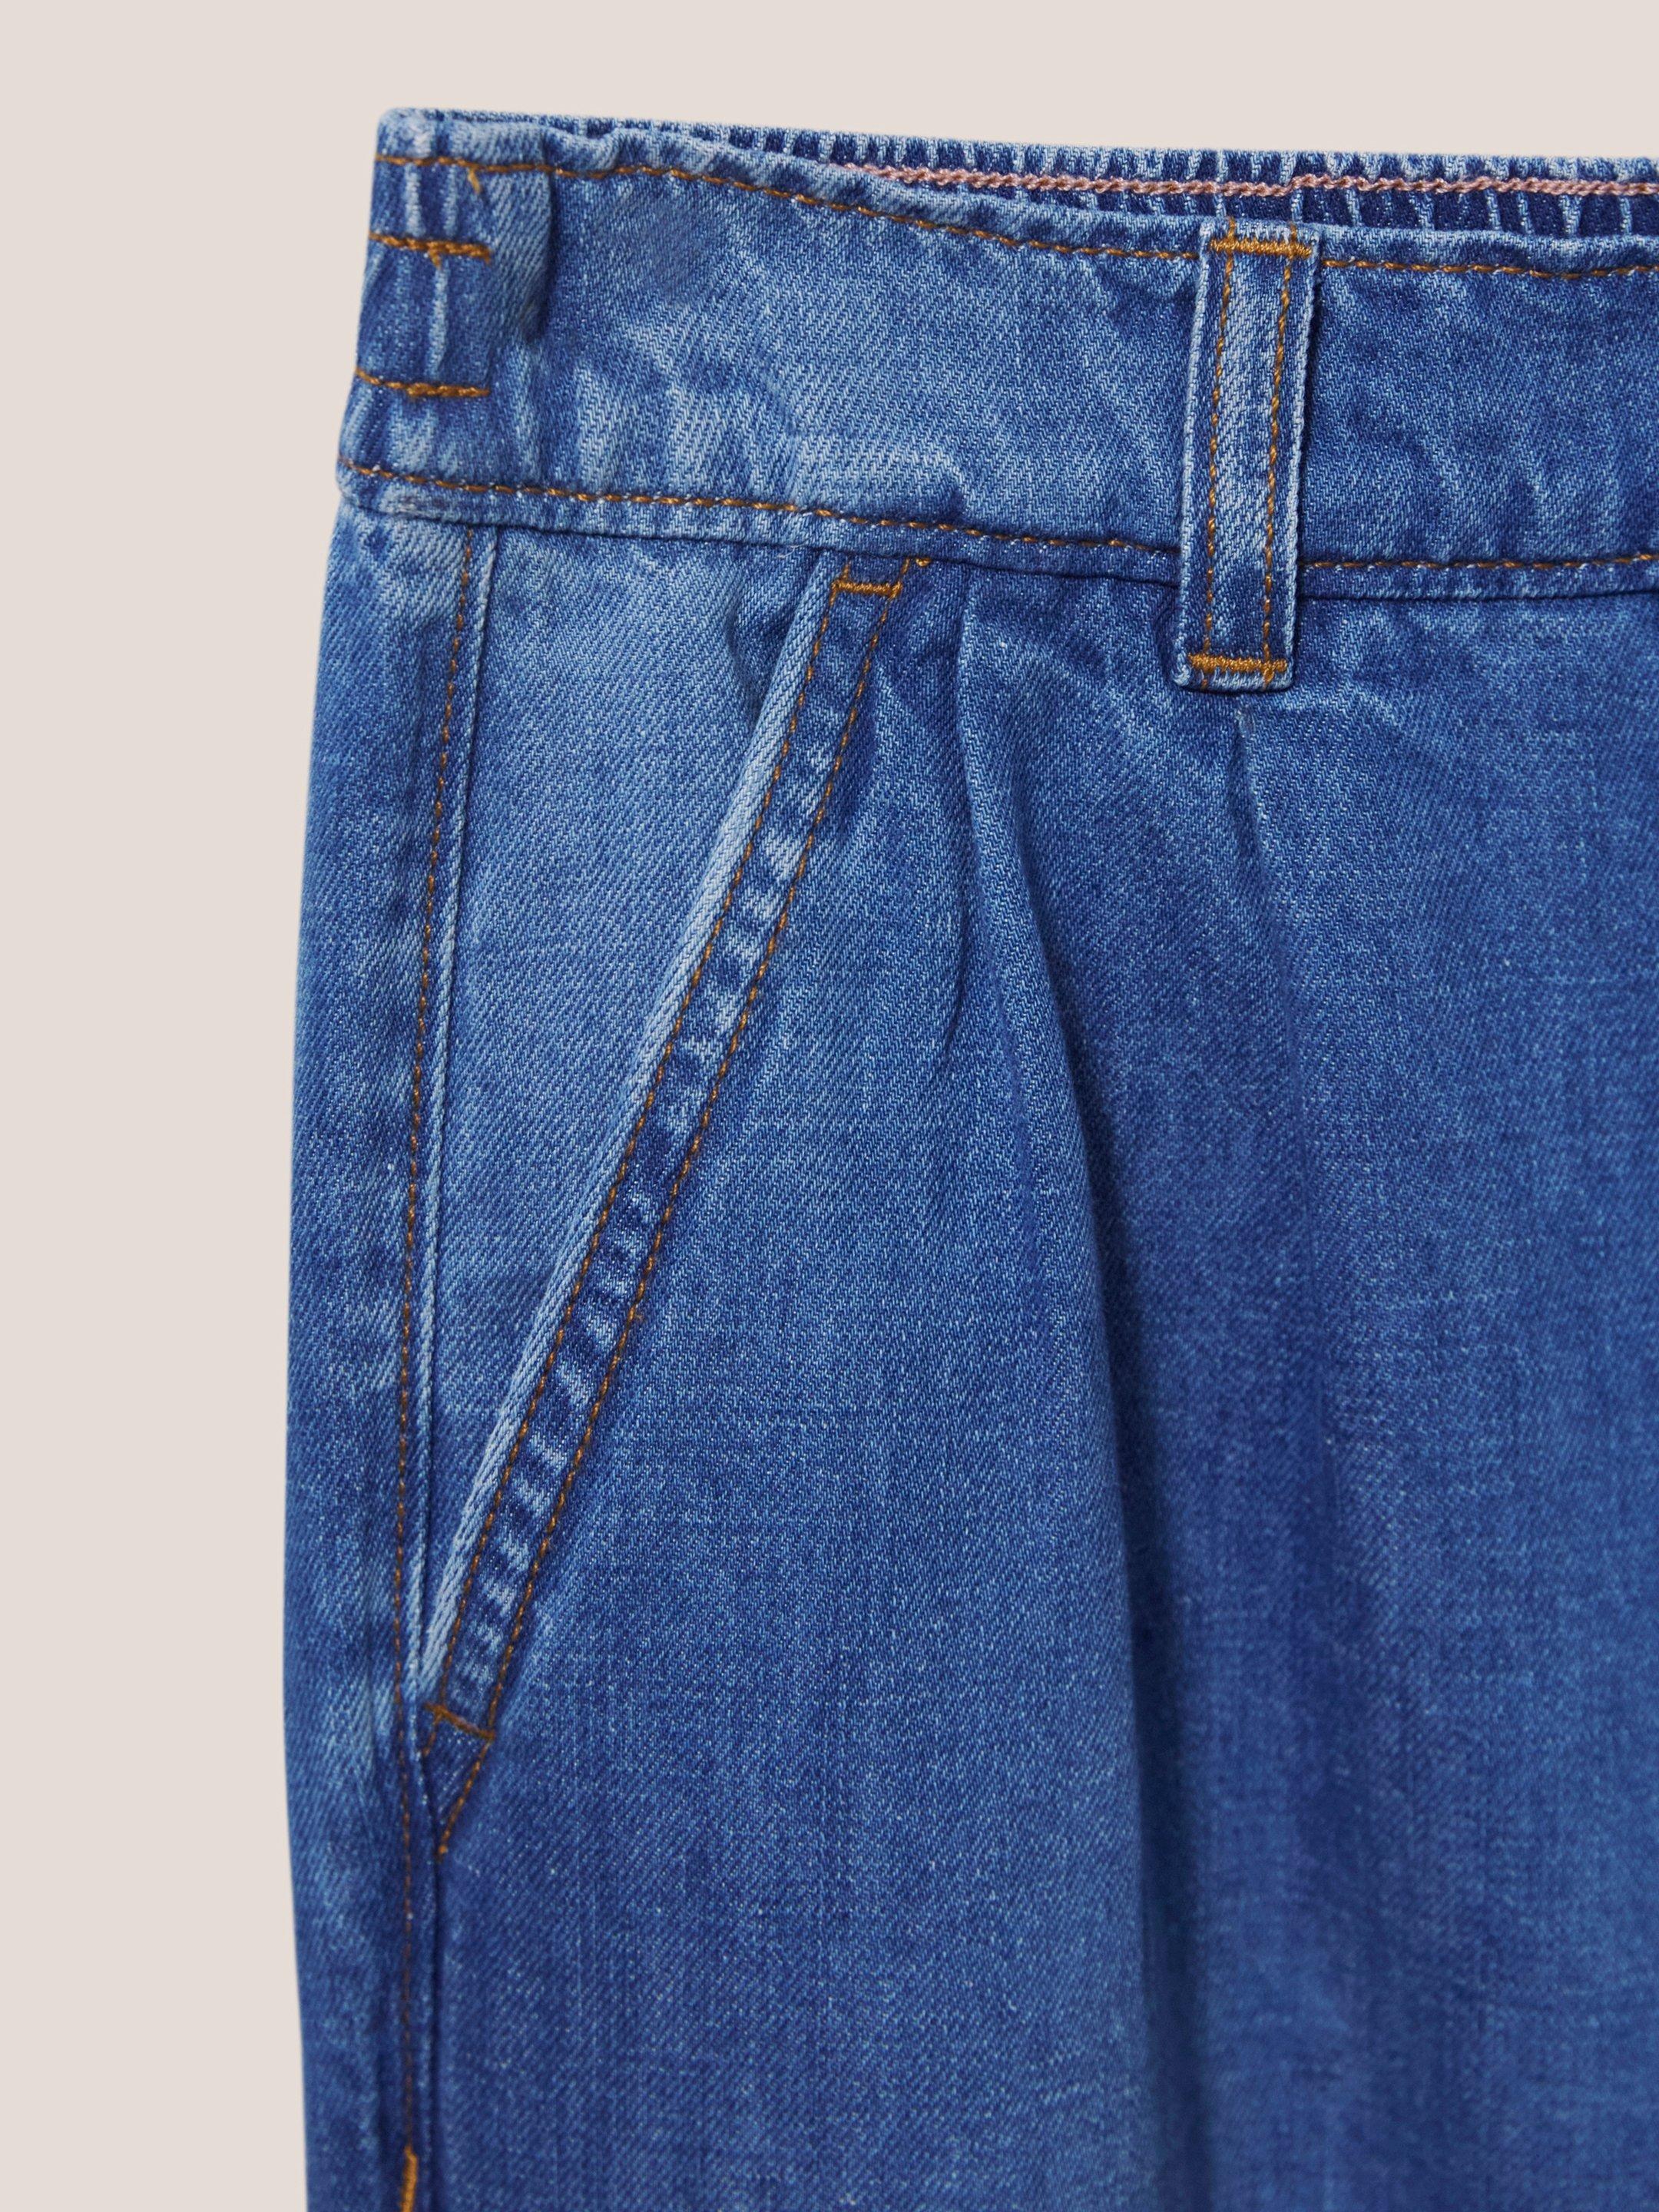 Ren Cotton Linen Wide Leg Jean in MID DENIM - FLAT DETAIL